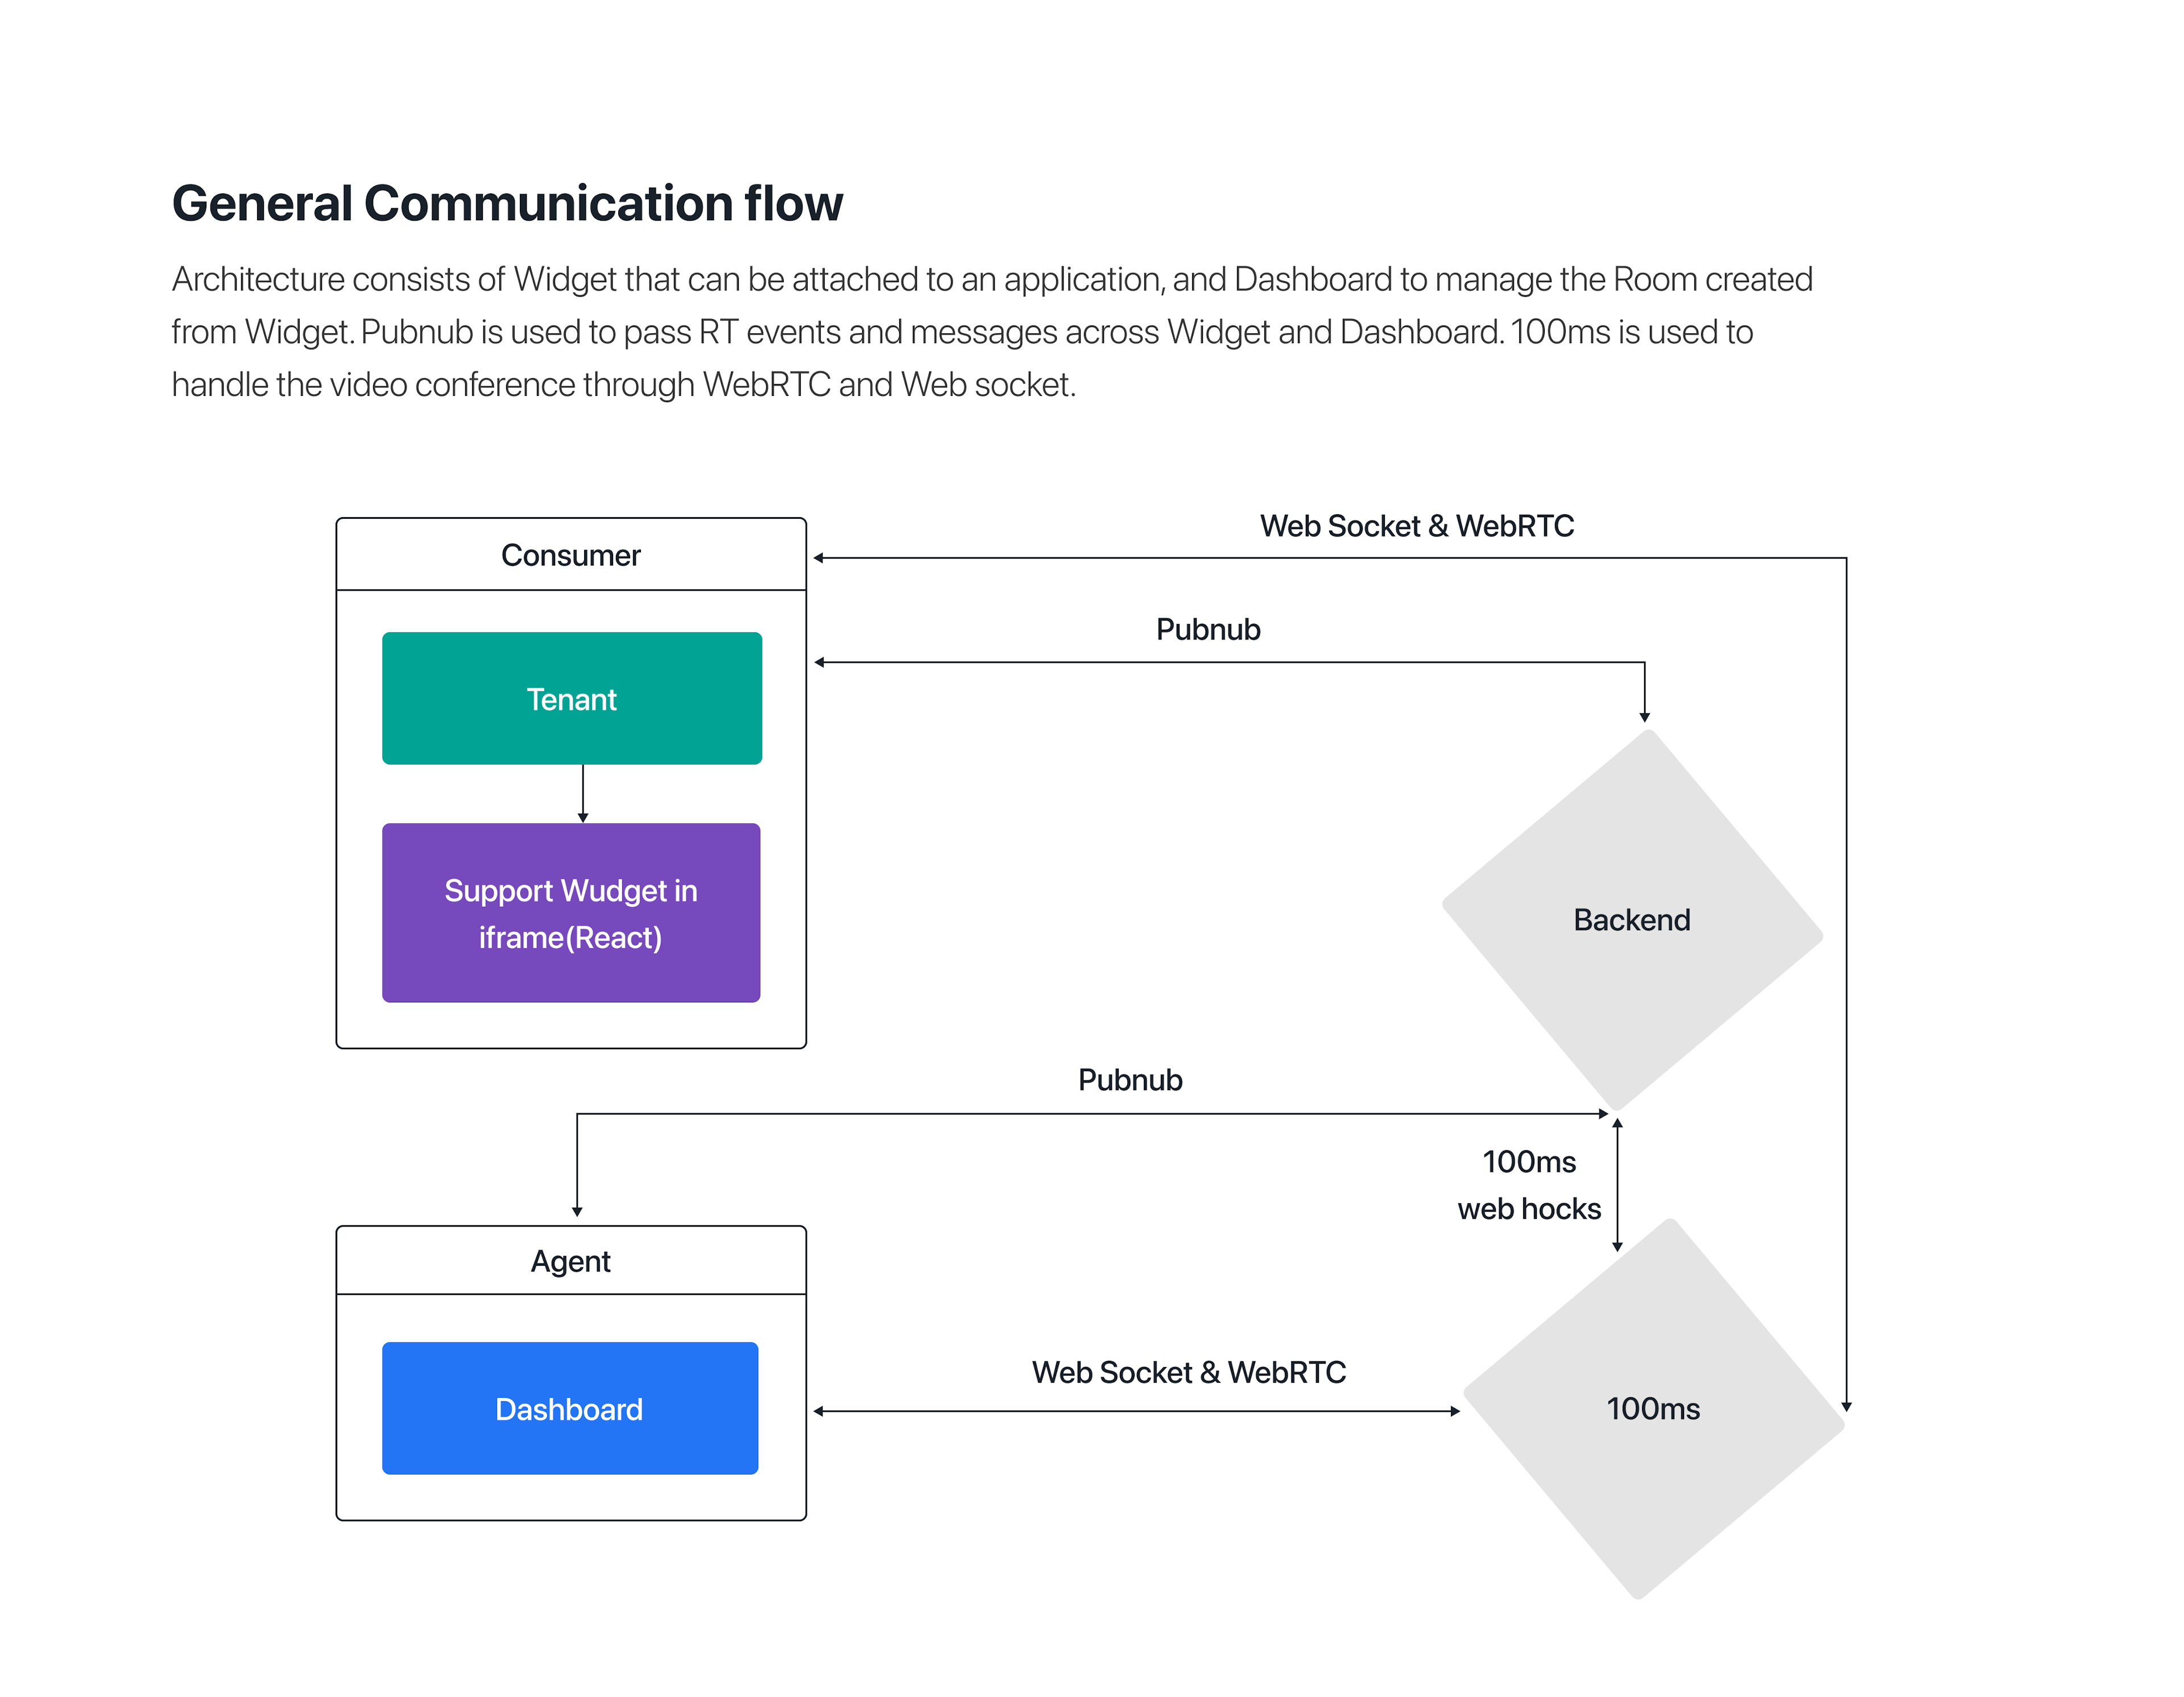 General Communication Flow